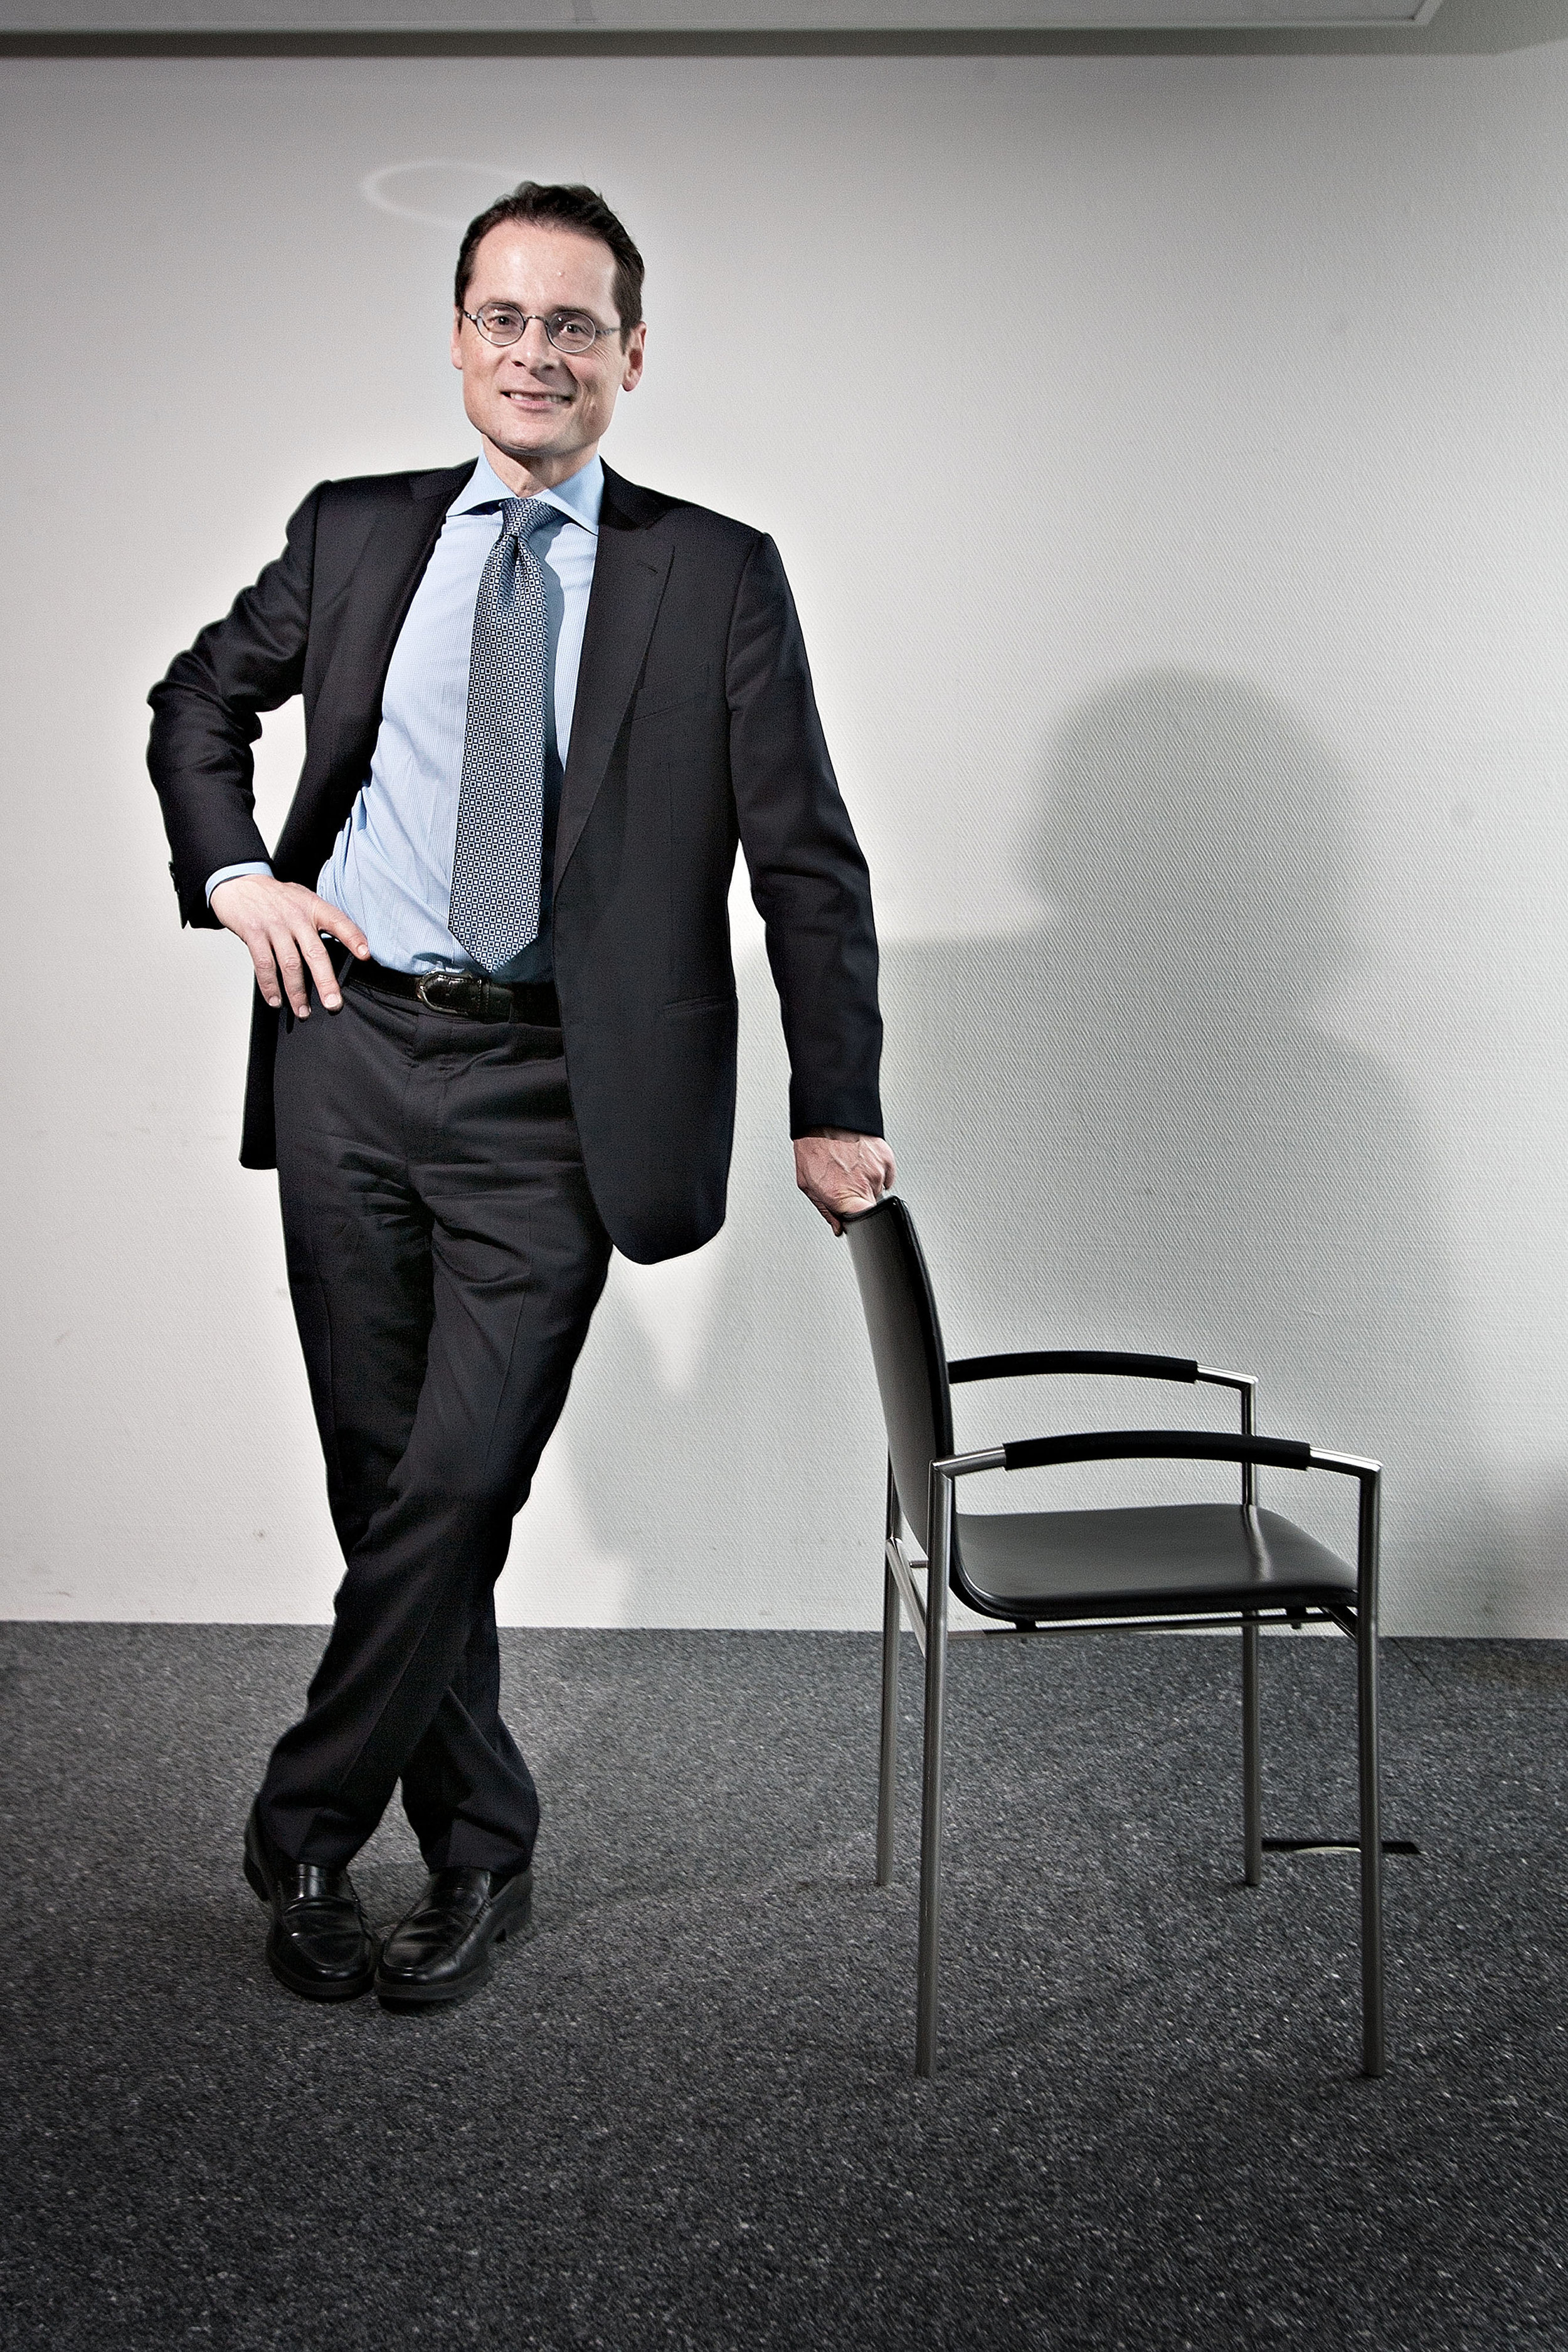  Roger Köppel, Verleger/Politiker - 24heures - 2013 